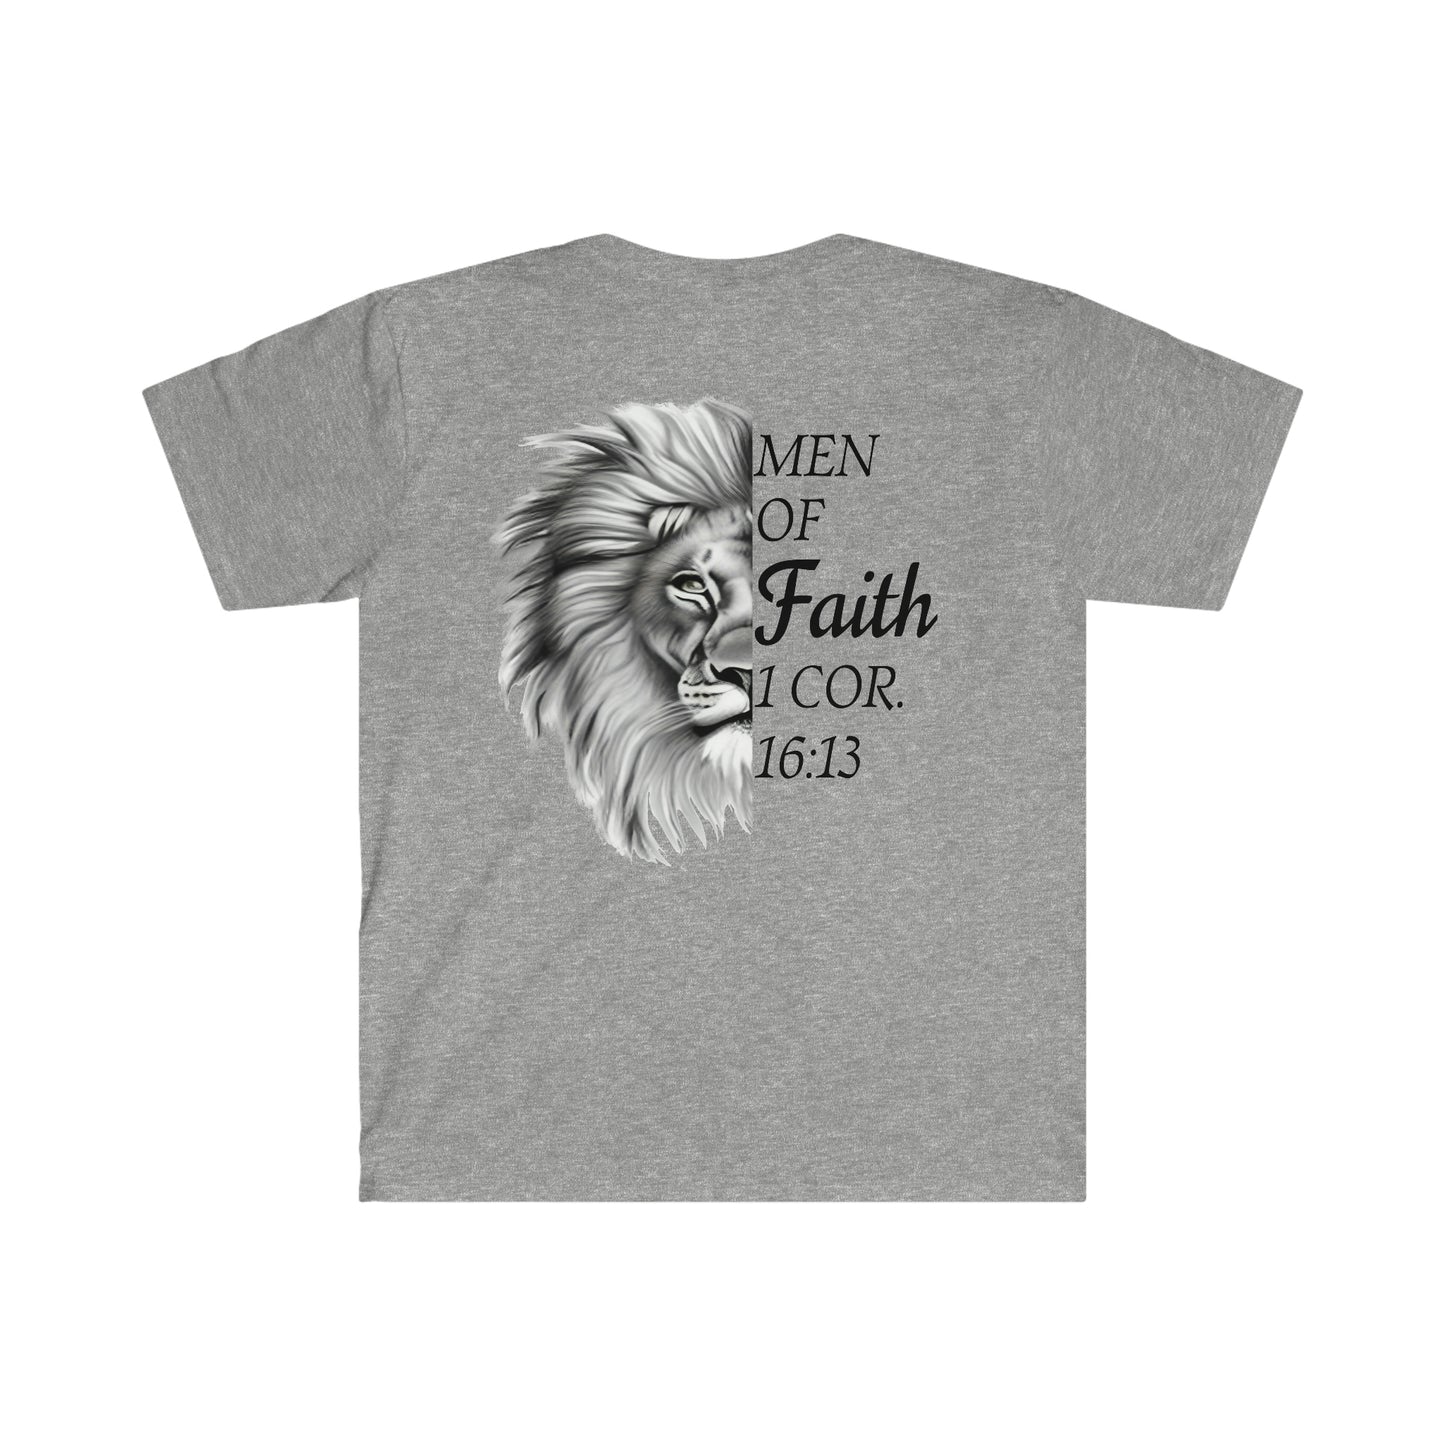 Faith Men's T-Shirt